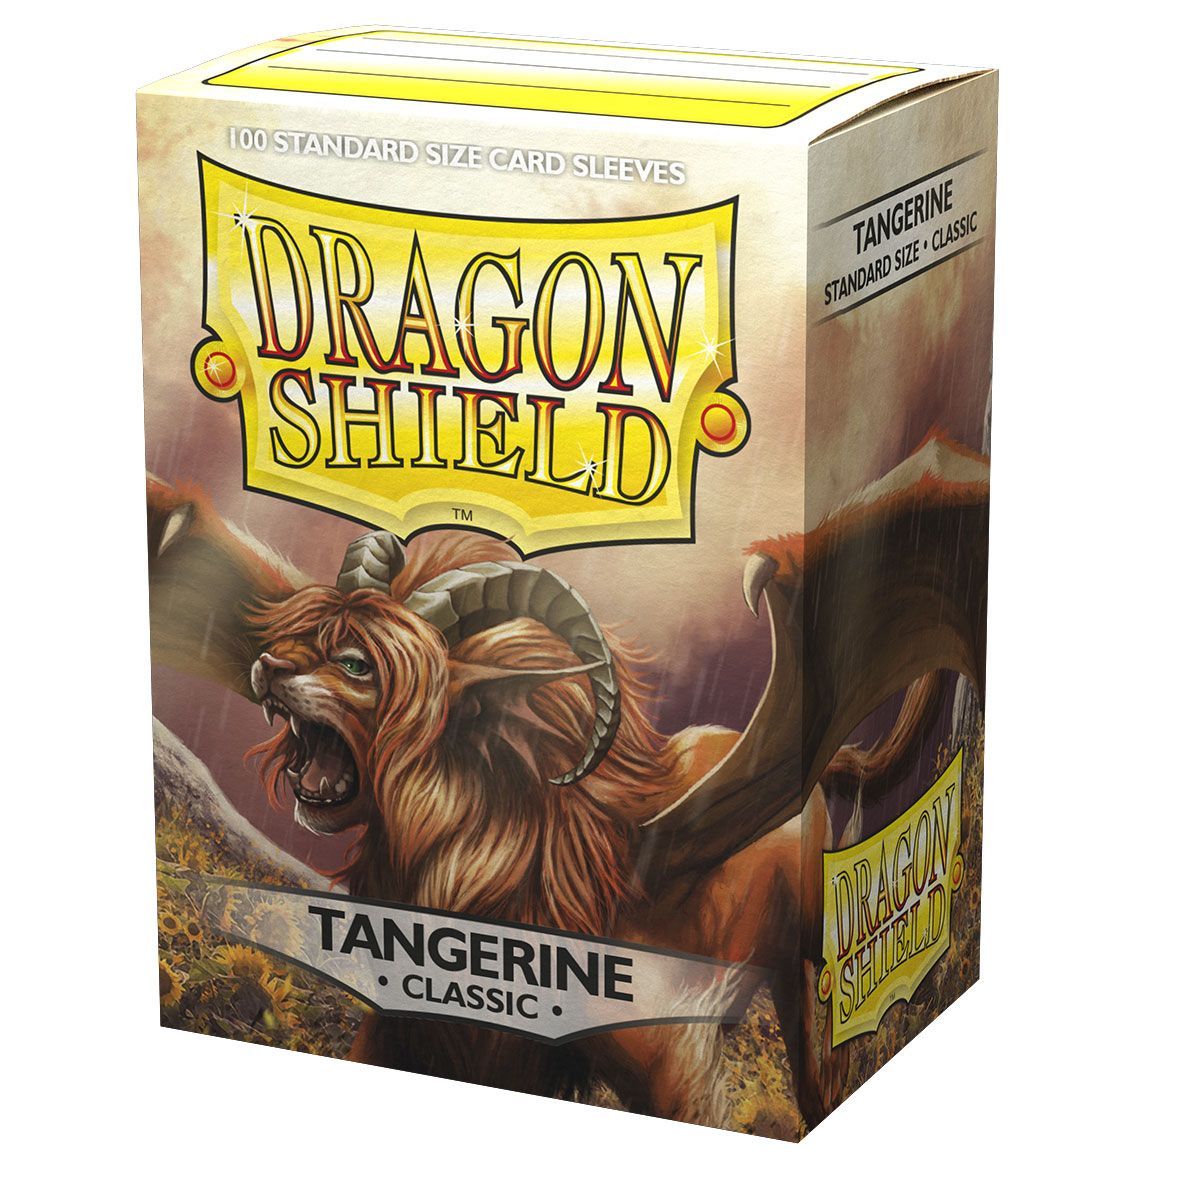 Dragon Shield Sleeves - Classic Tangerine